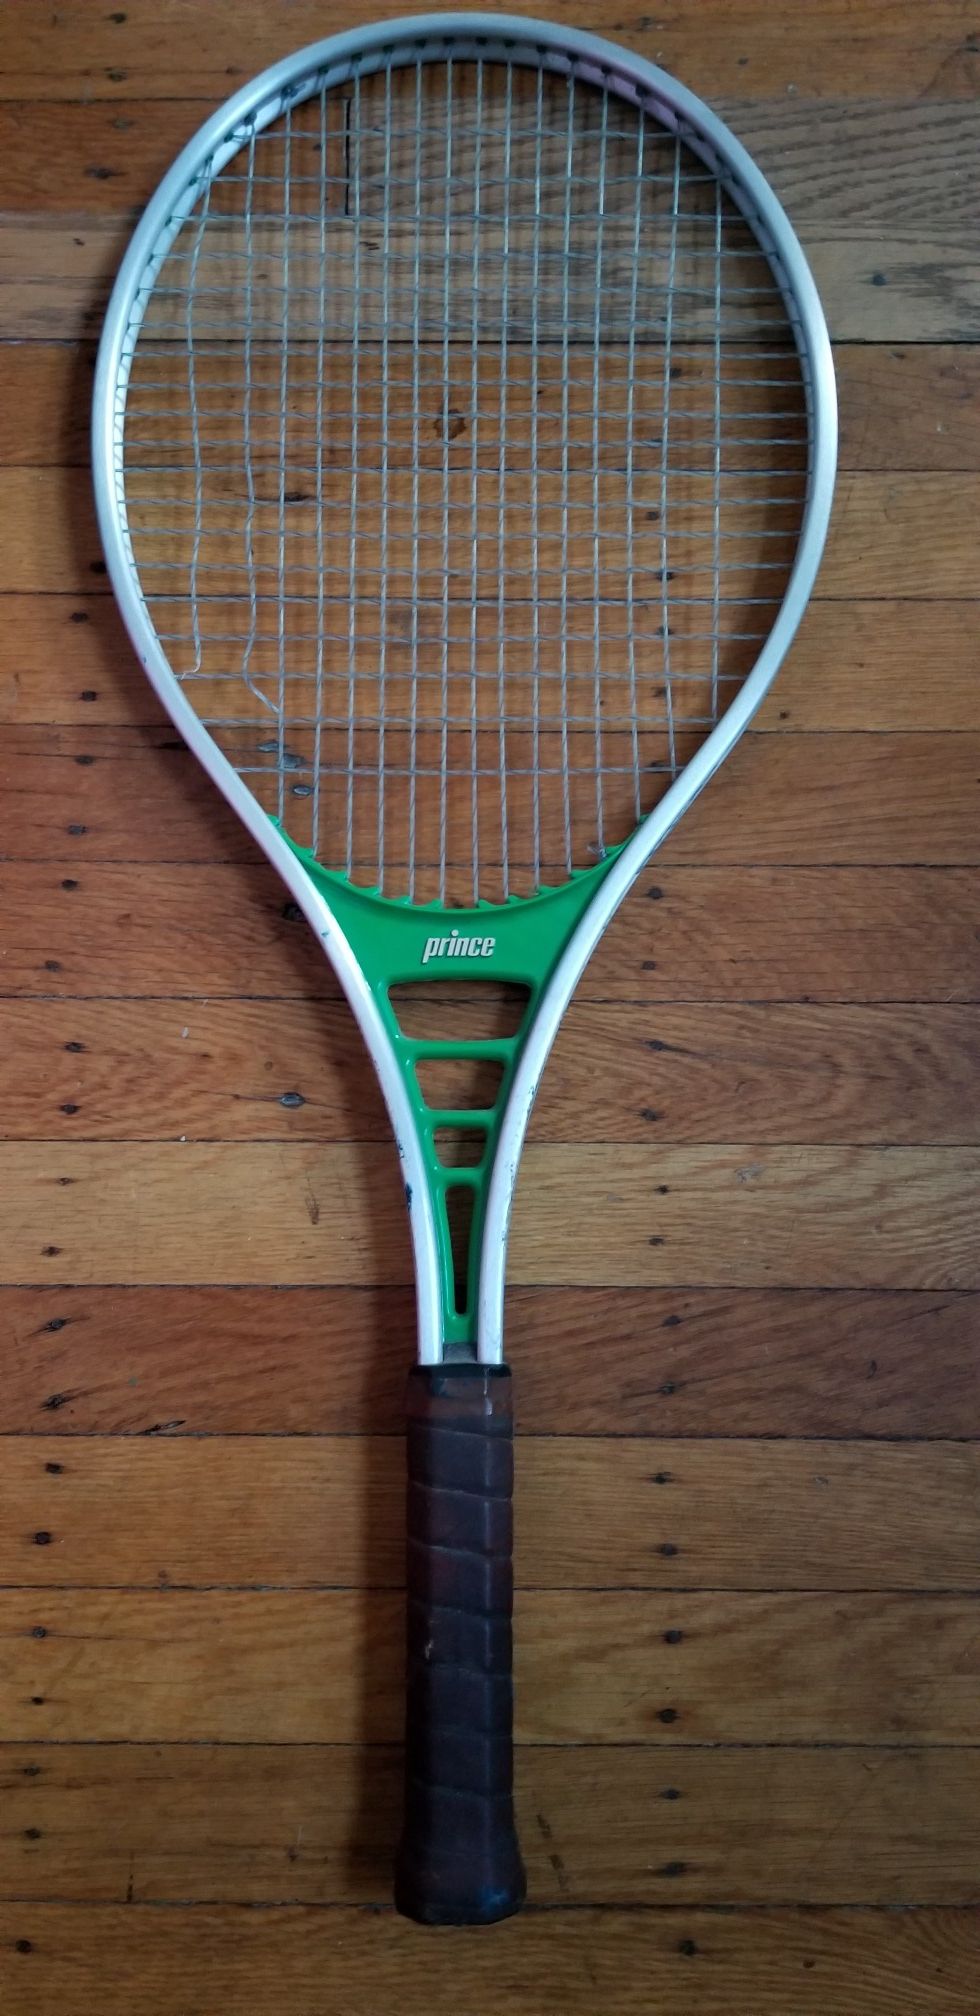 Tennis Racket (Prince Brand) - Needs Restringing